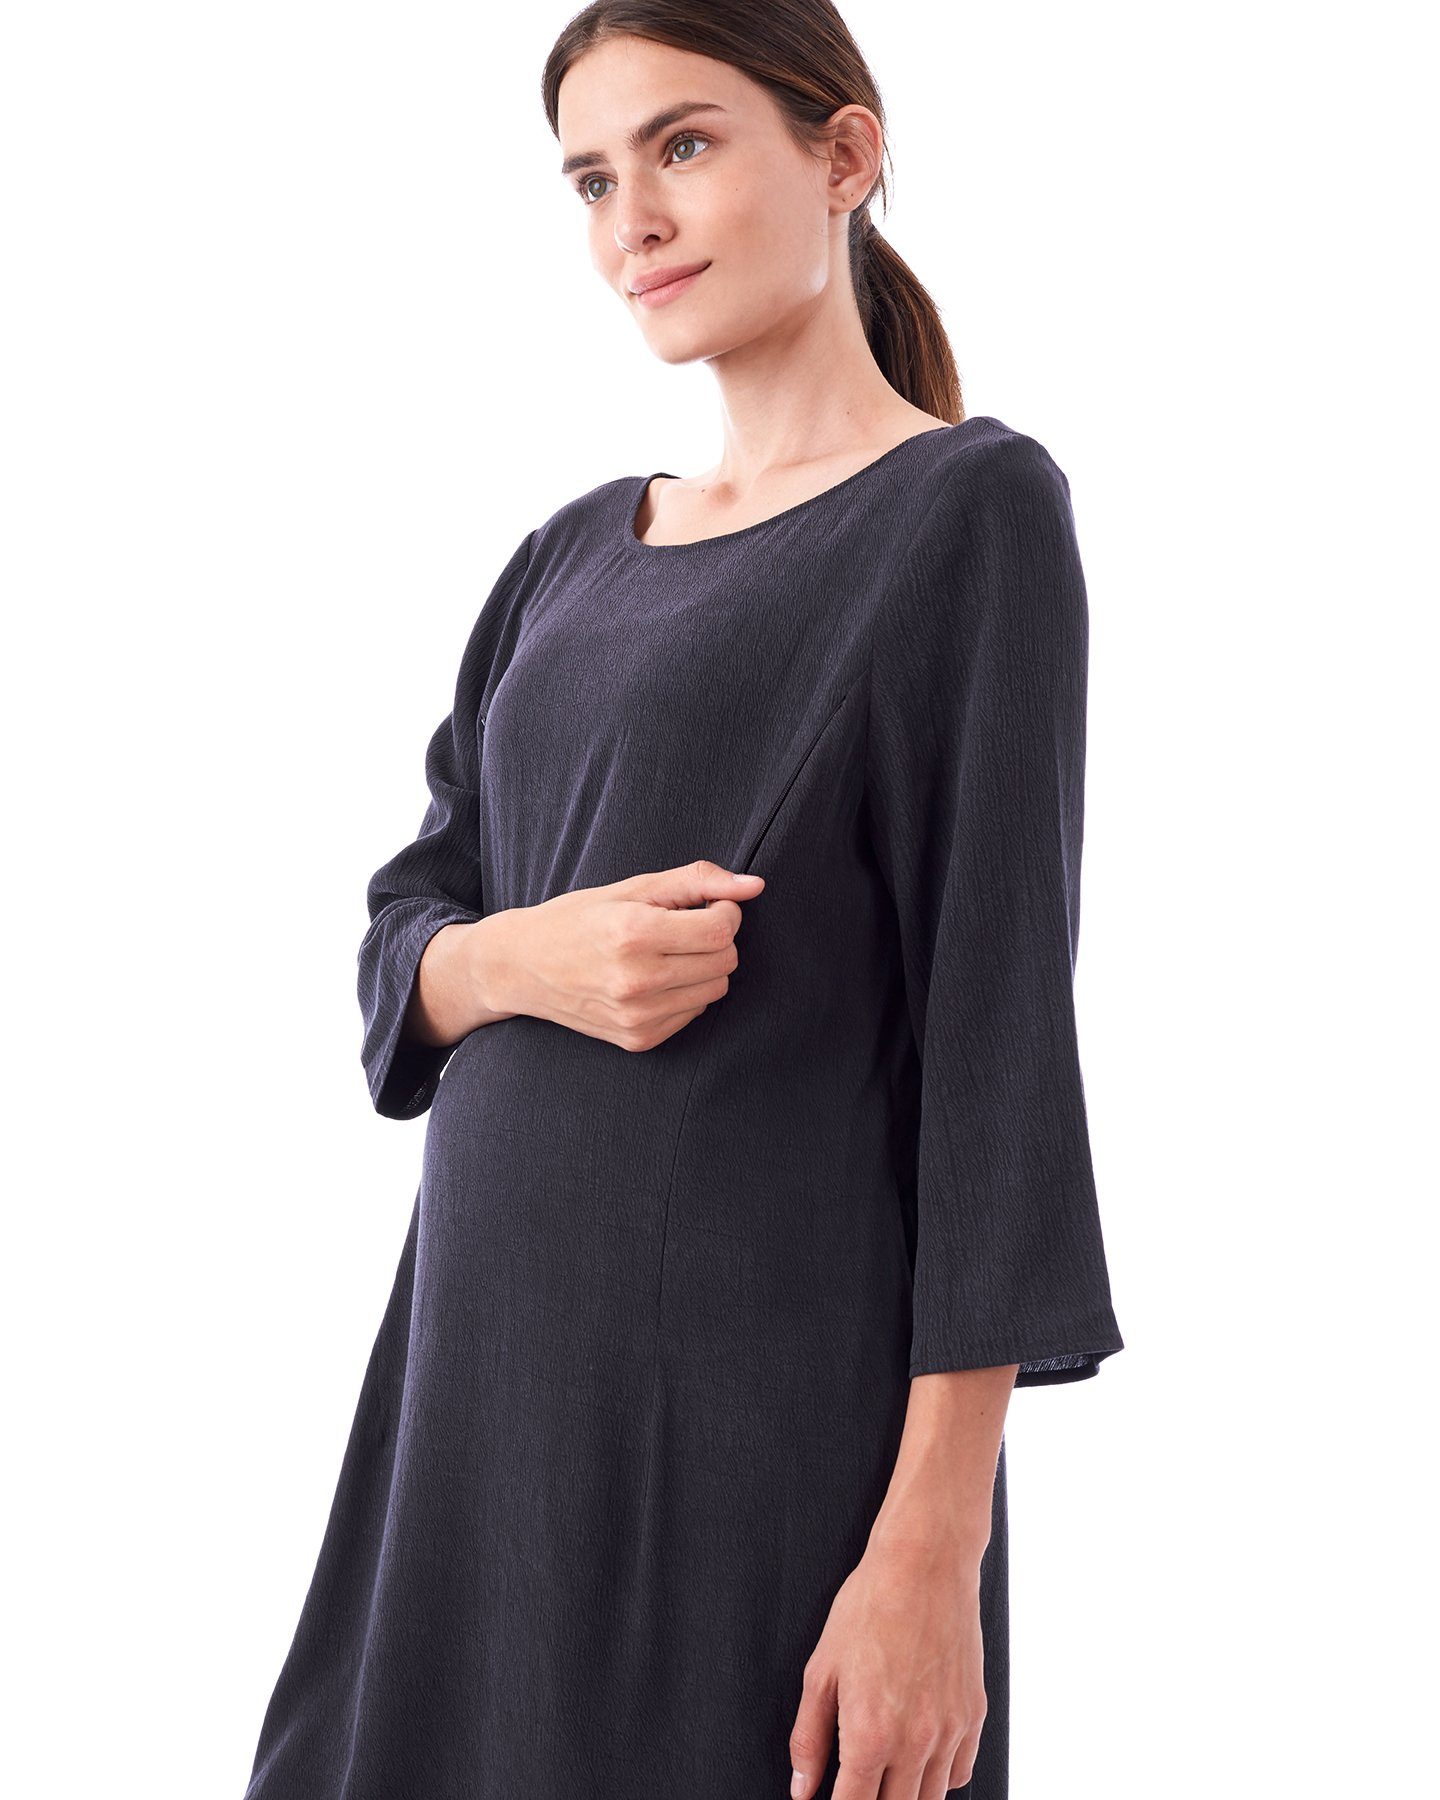 LAYLA - Charcoal 3/4 sleeve dress